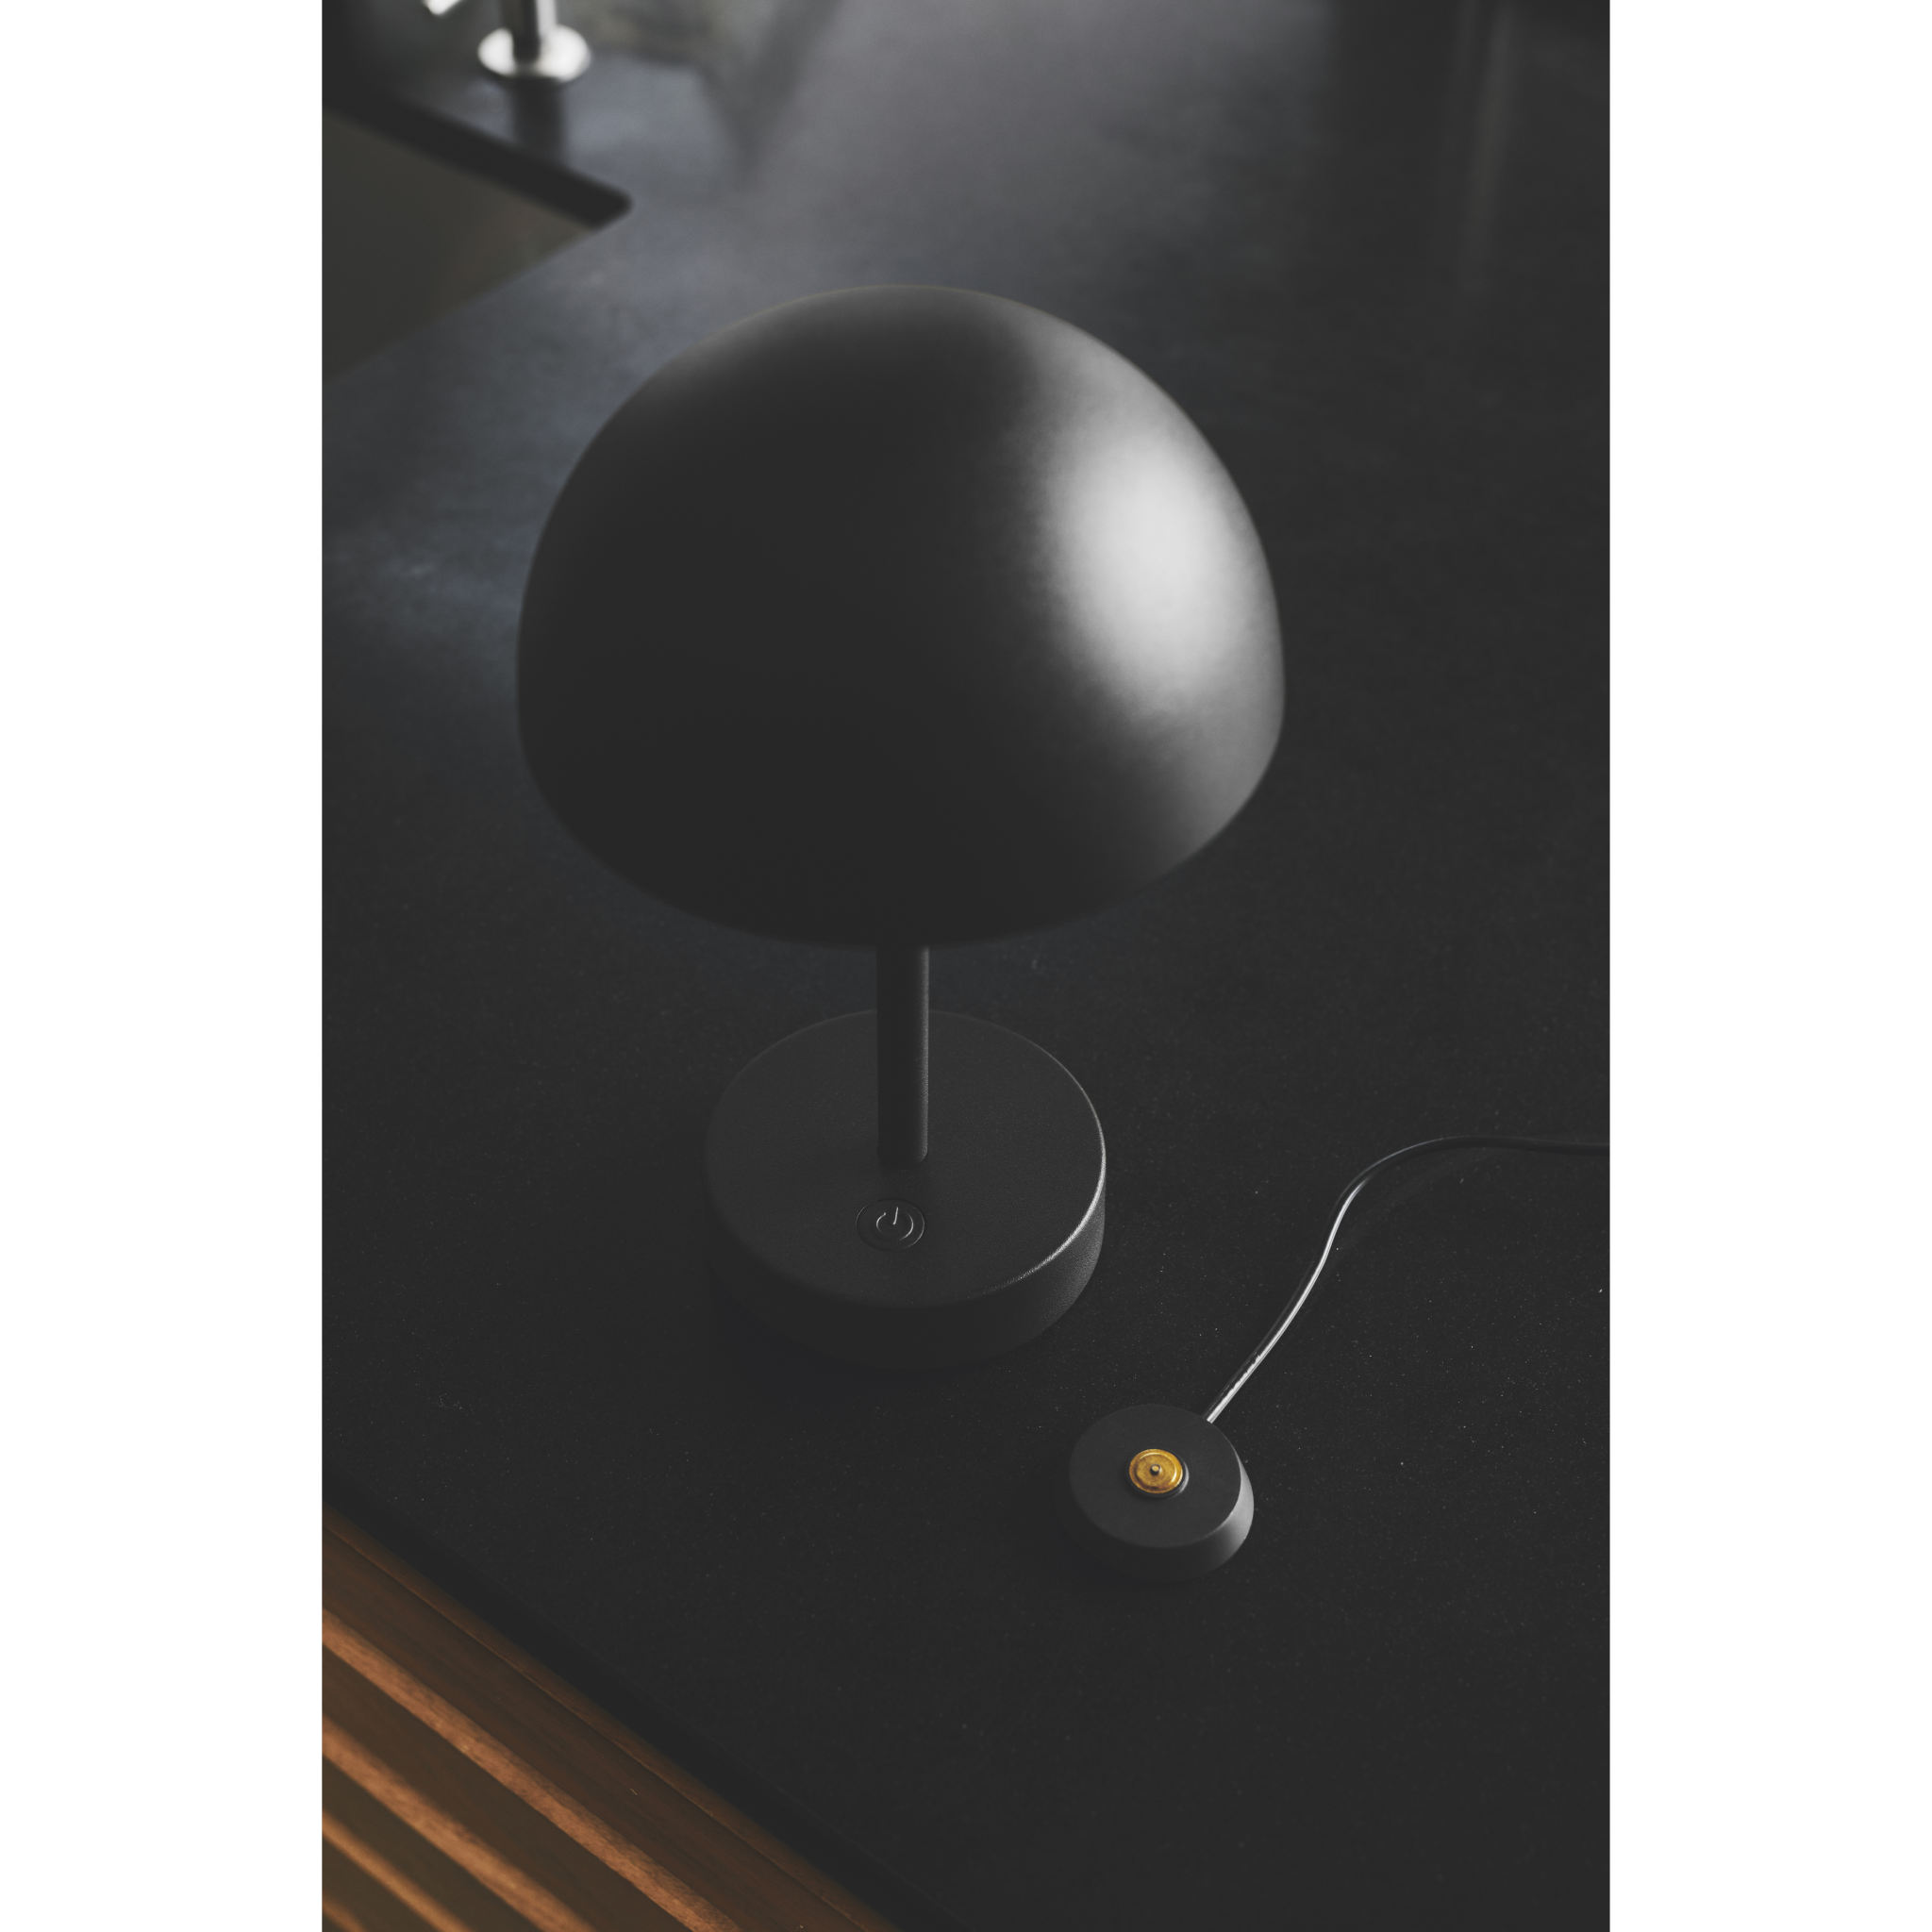 5704924017483 Nordlux Ellen To-Go sort - Bordlampe portable Lamper,Bordlamper,Trådløse bordlamper 87100011600 2418015003